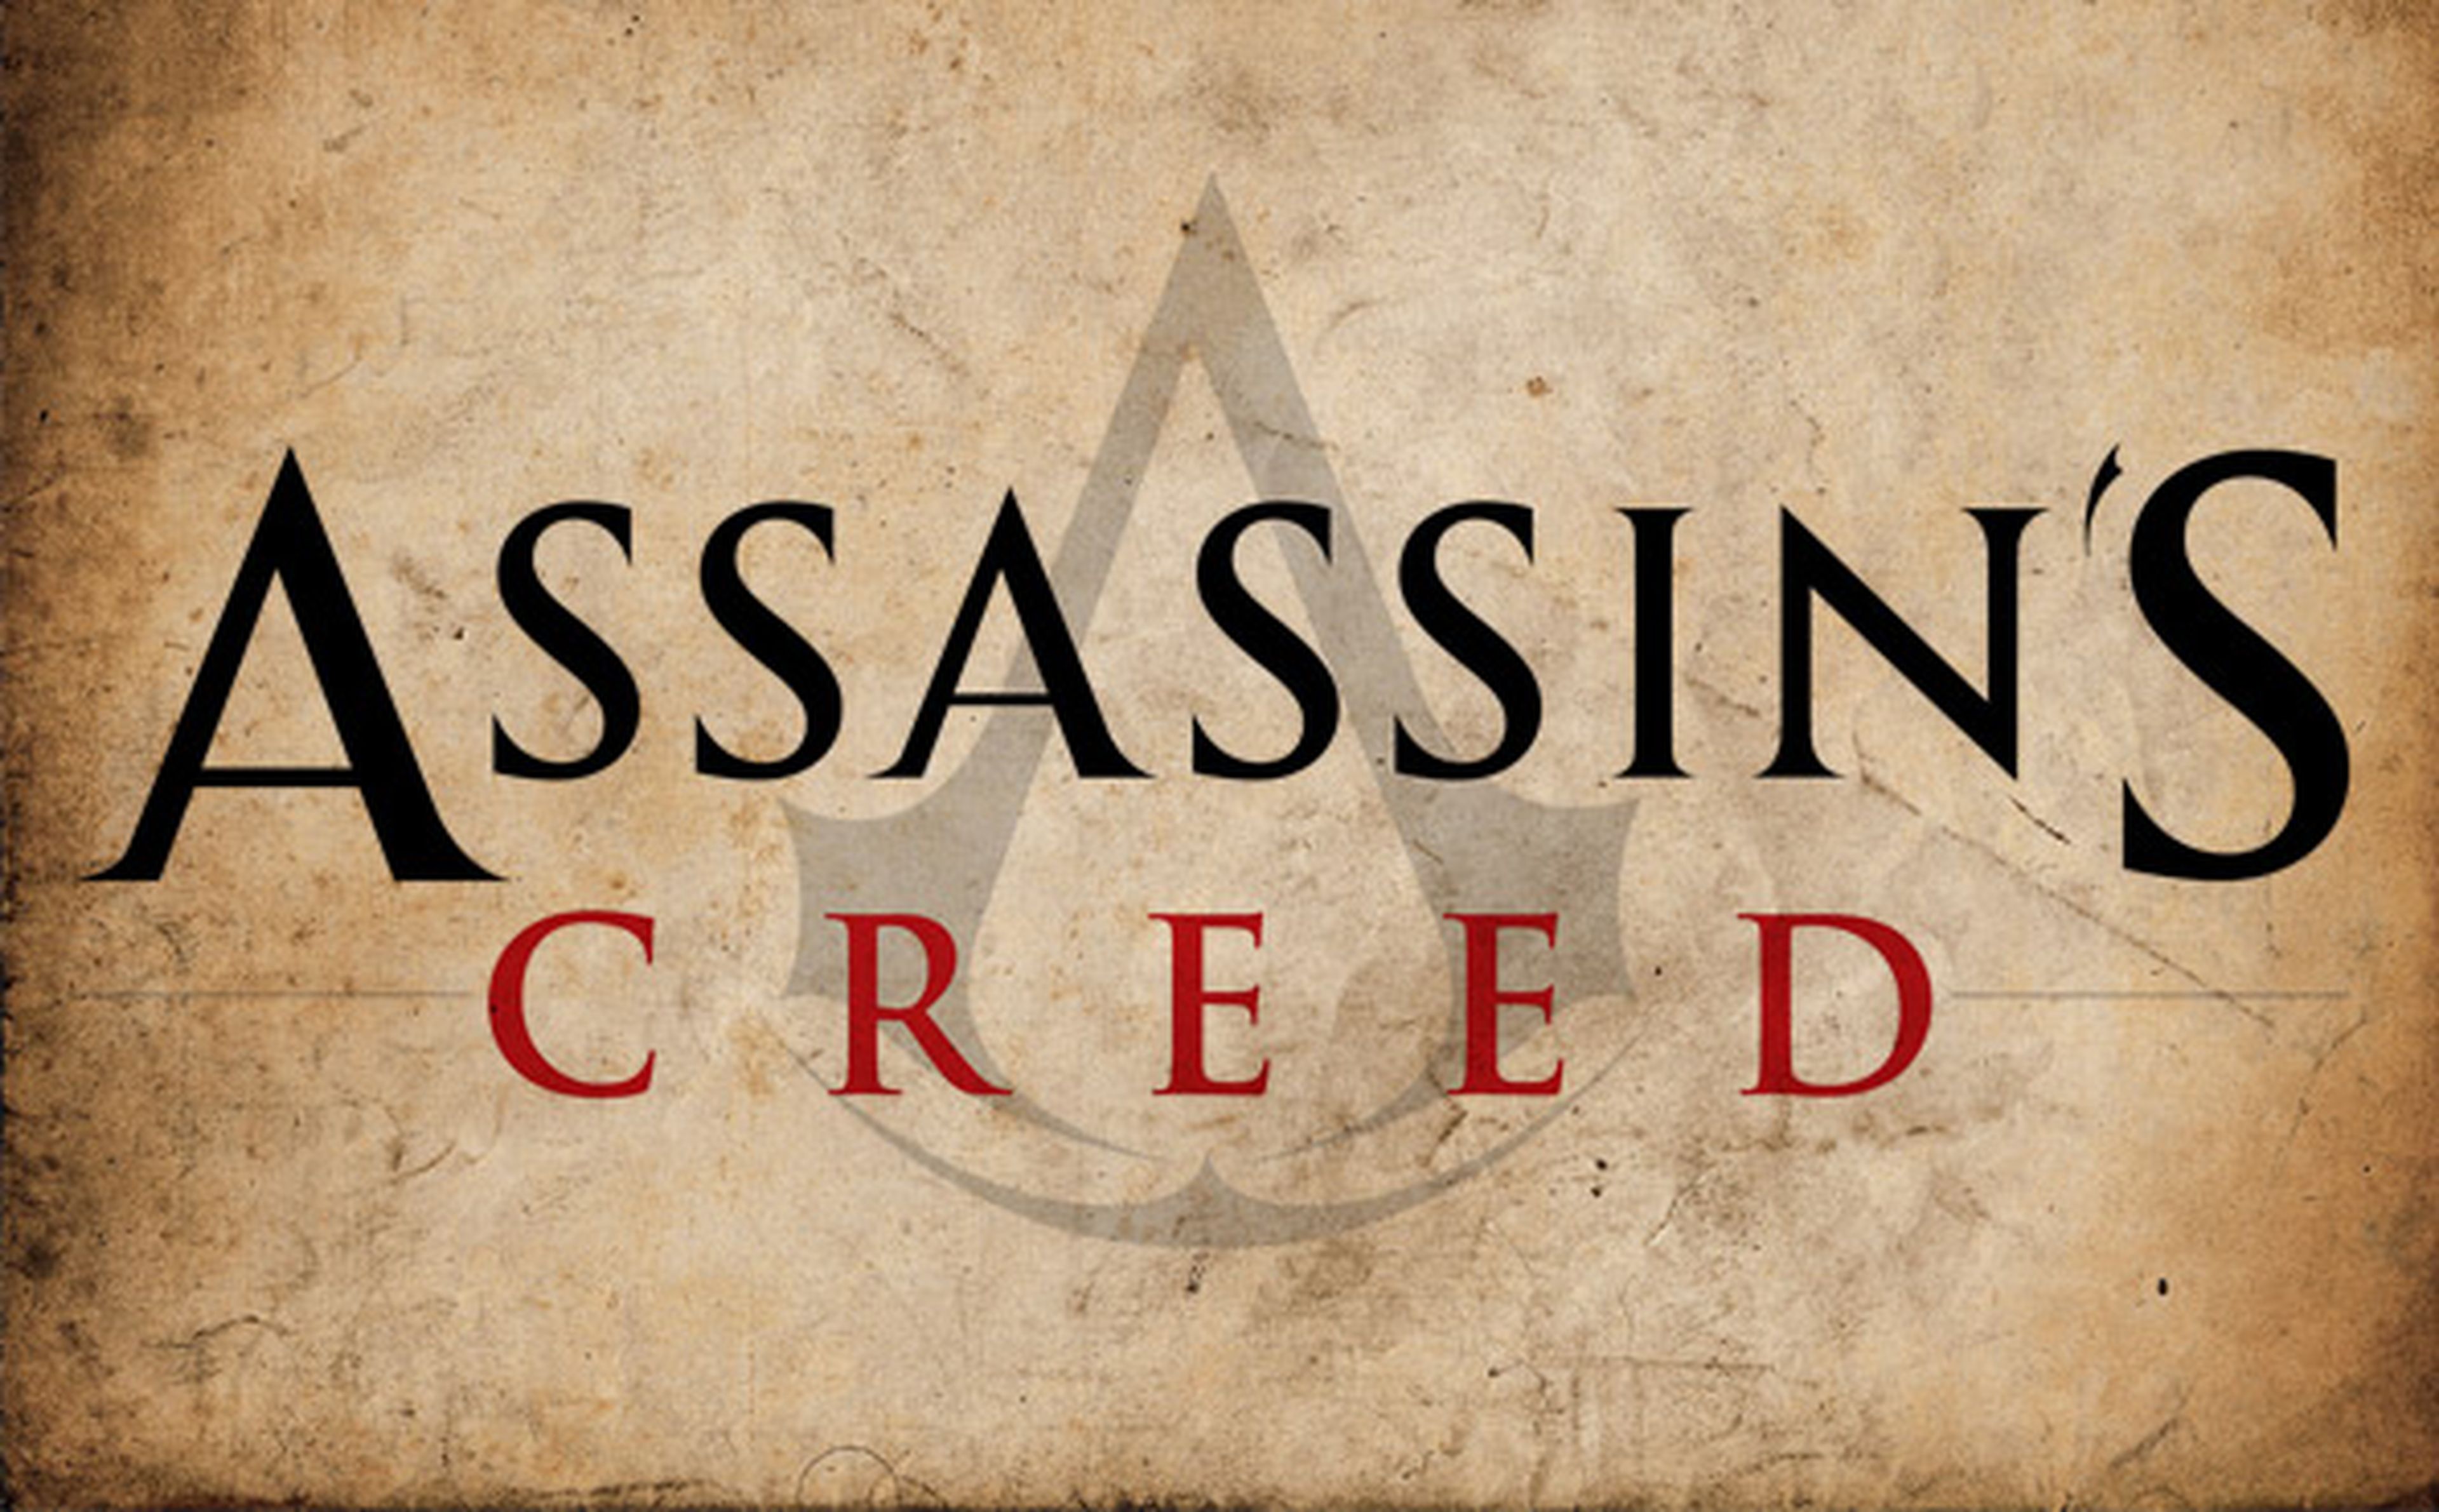 Mayo, mes del nuevo Assassins Creed